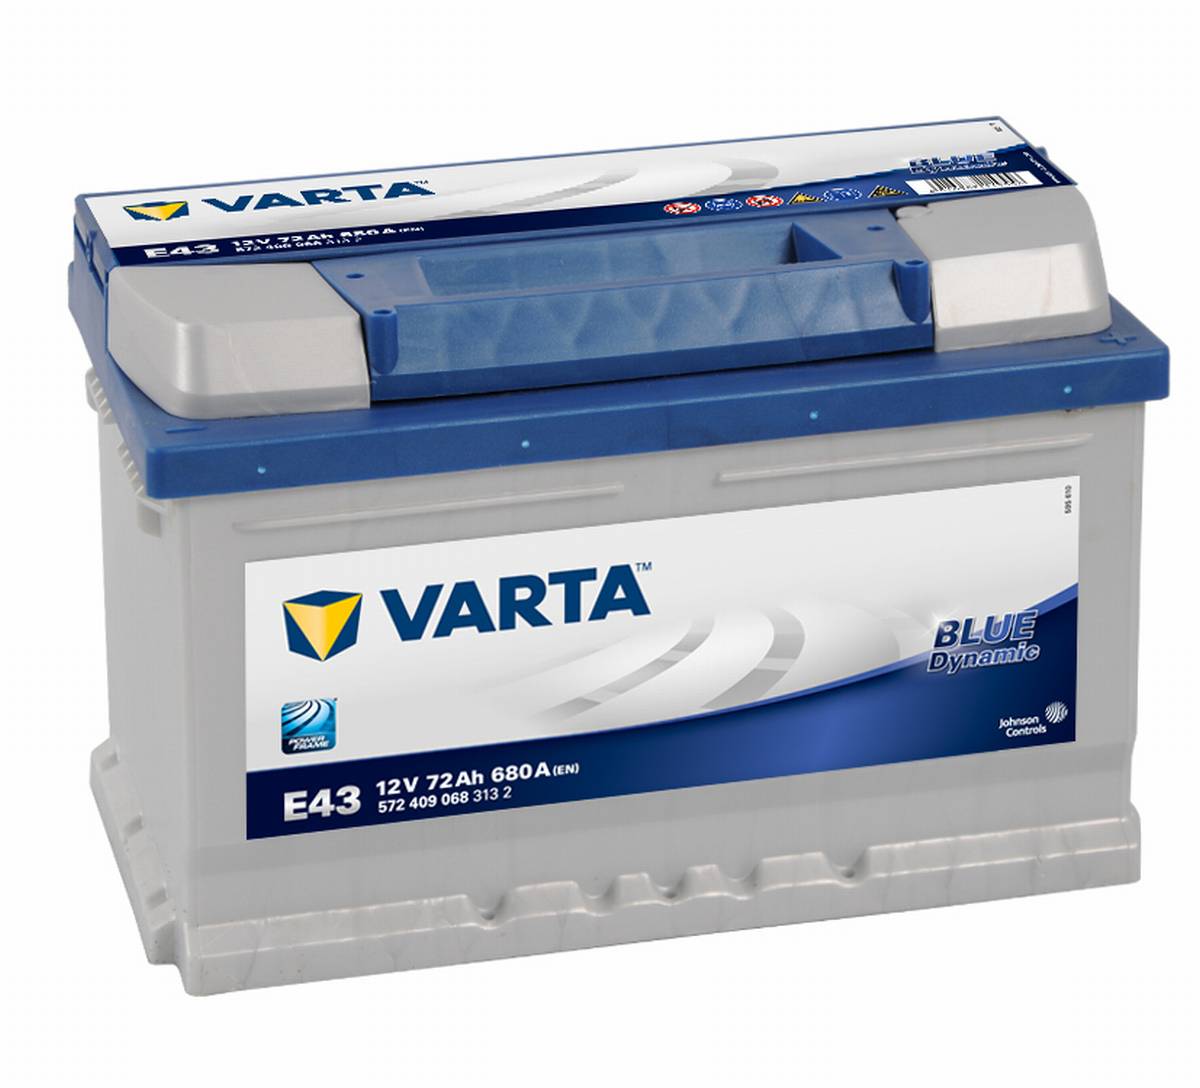 Varta BLUE Dynamic 572 409 068 3132 E43 12V 72Ah 680A/EN car battery, Starter batteries, Boots & Marine, Batteries by application